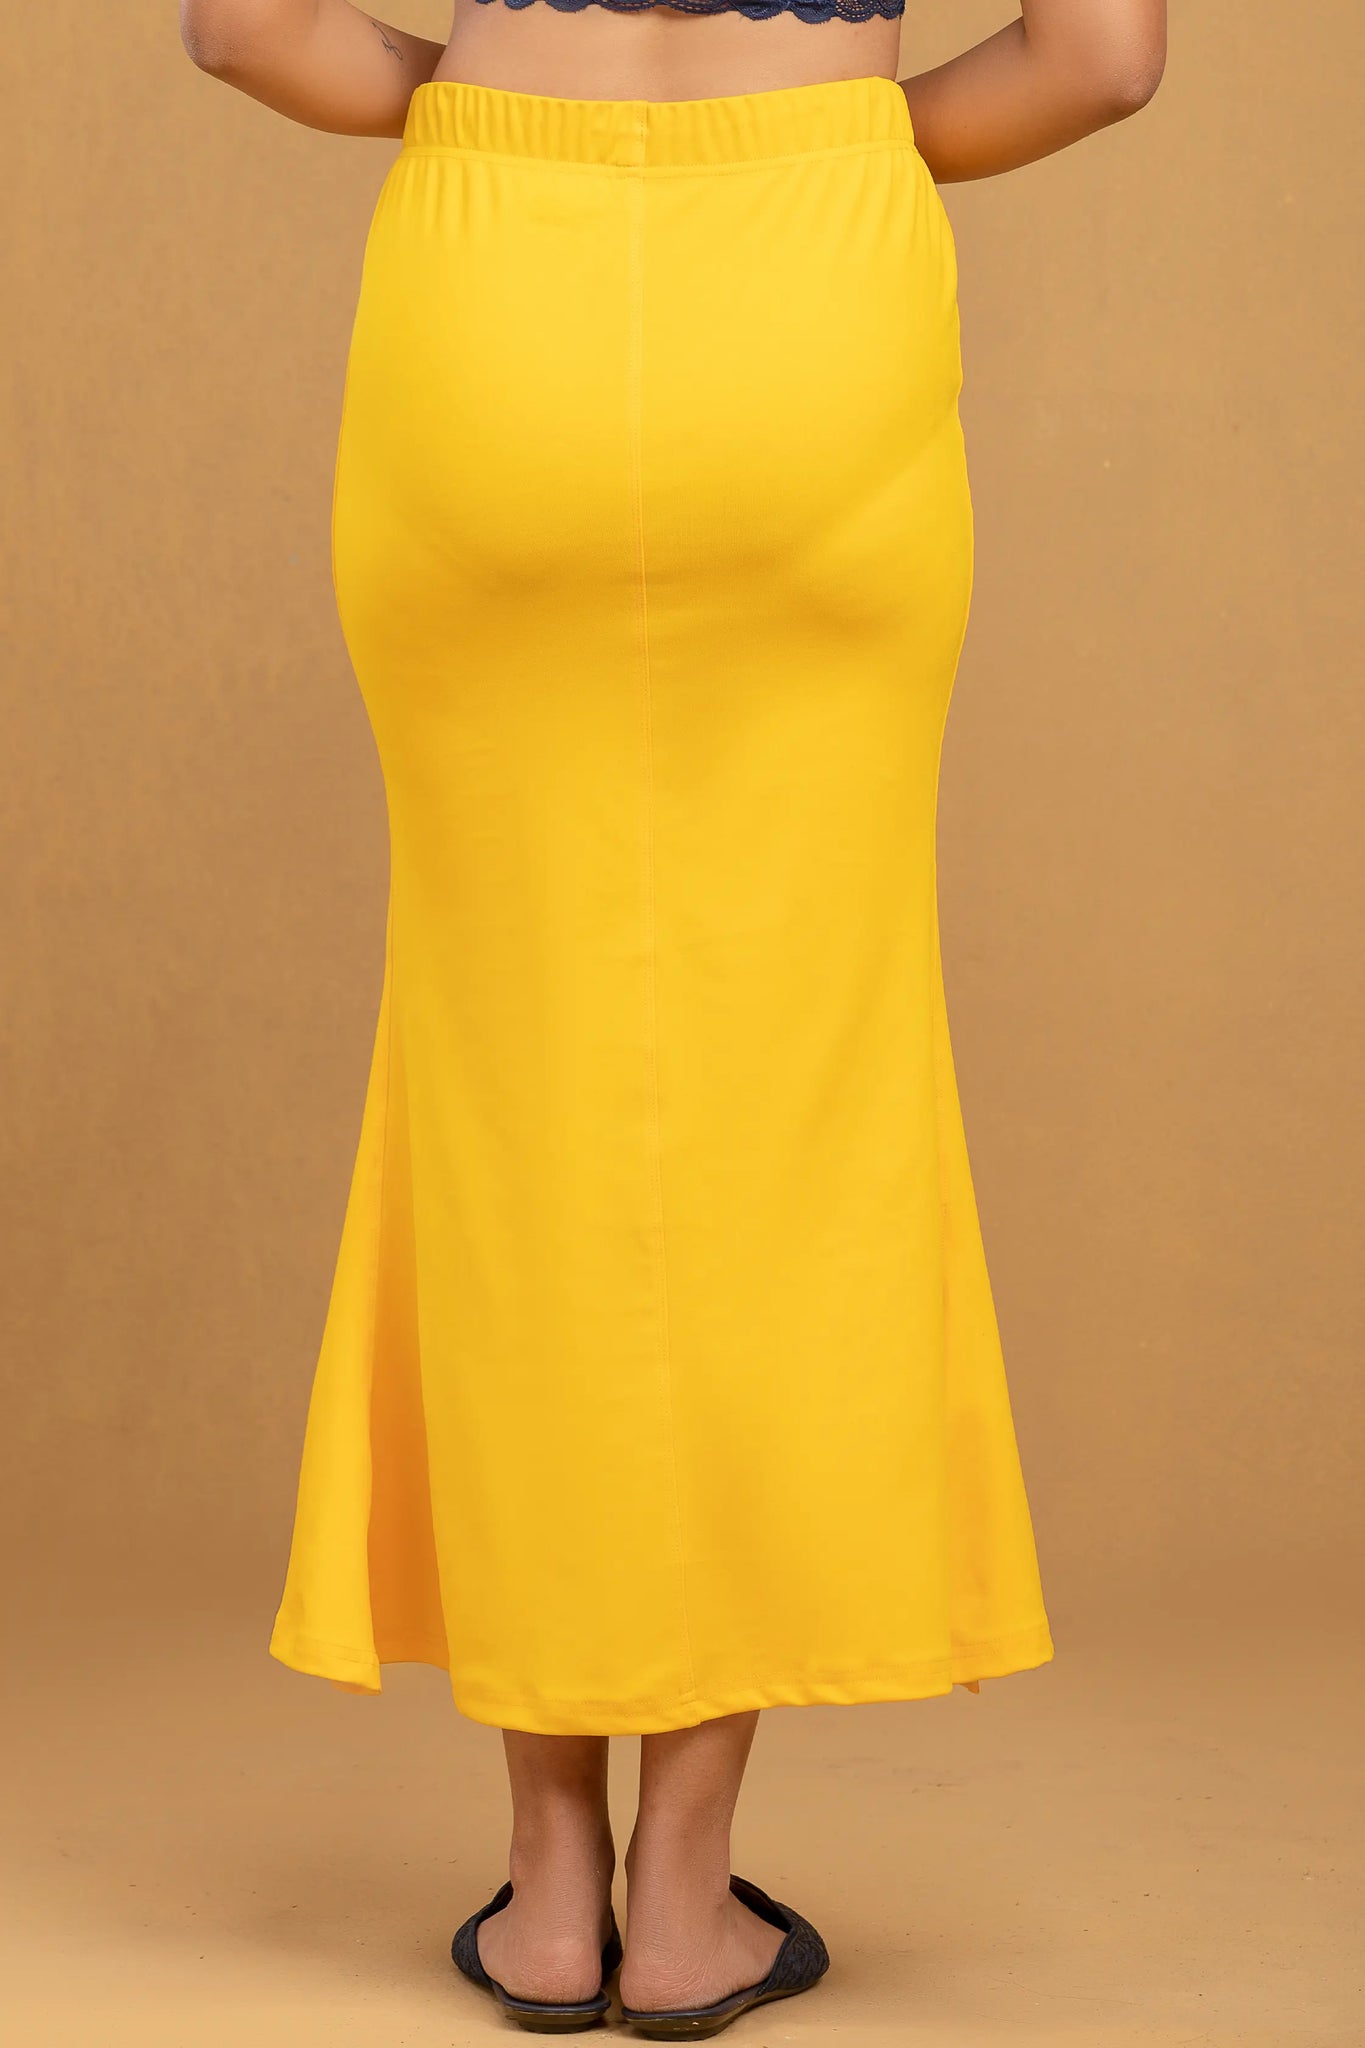 Buy BUYONN Women Yellow Spandex Saree Shapewear (S) Online at Best